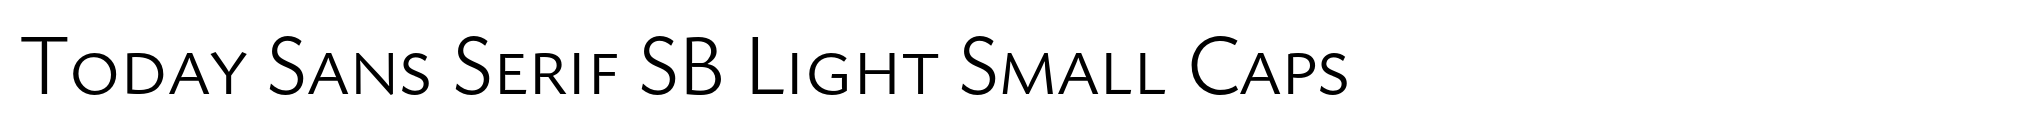 Today Sans Serif SB Light Small Caps image